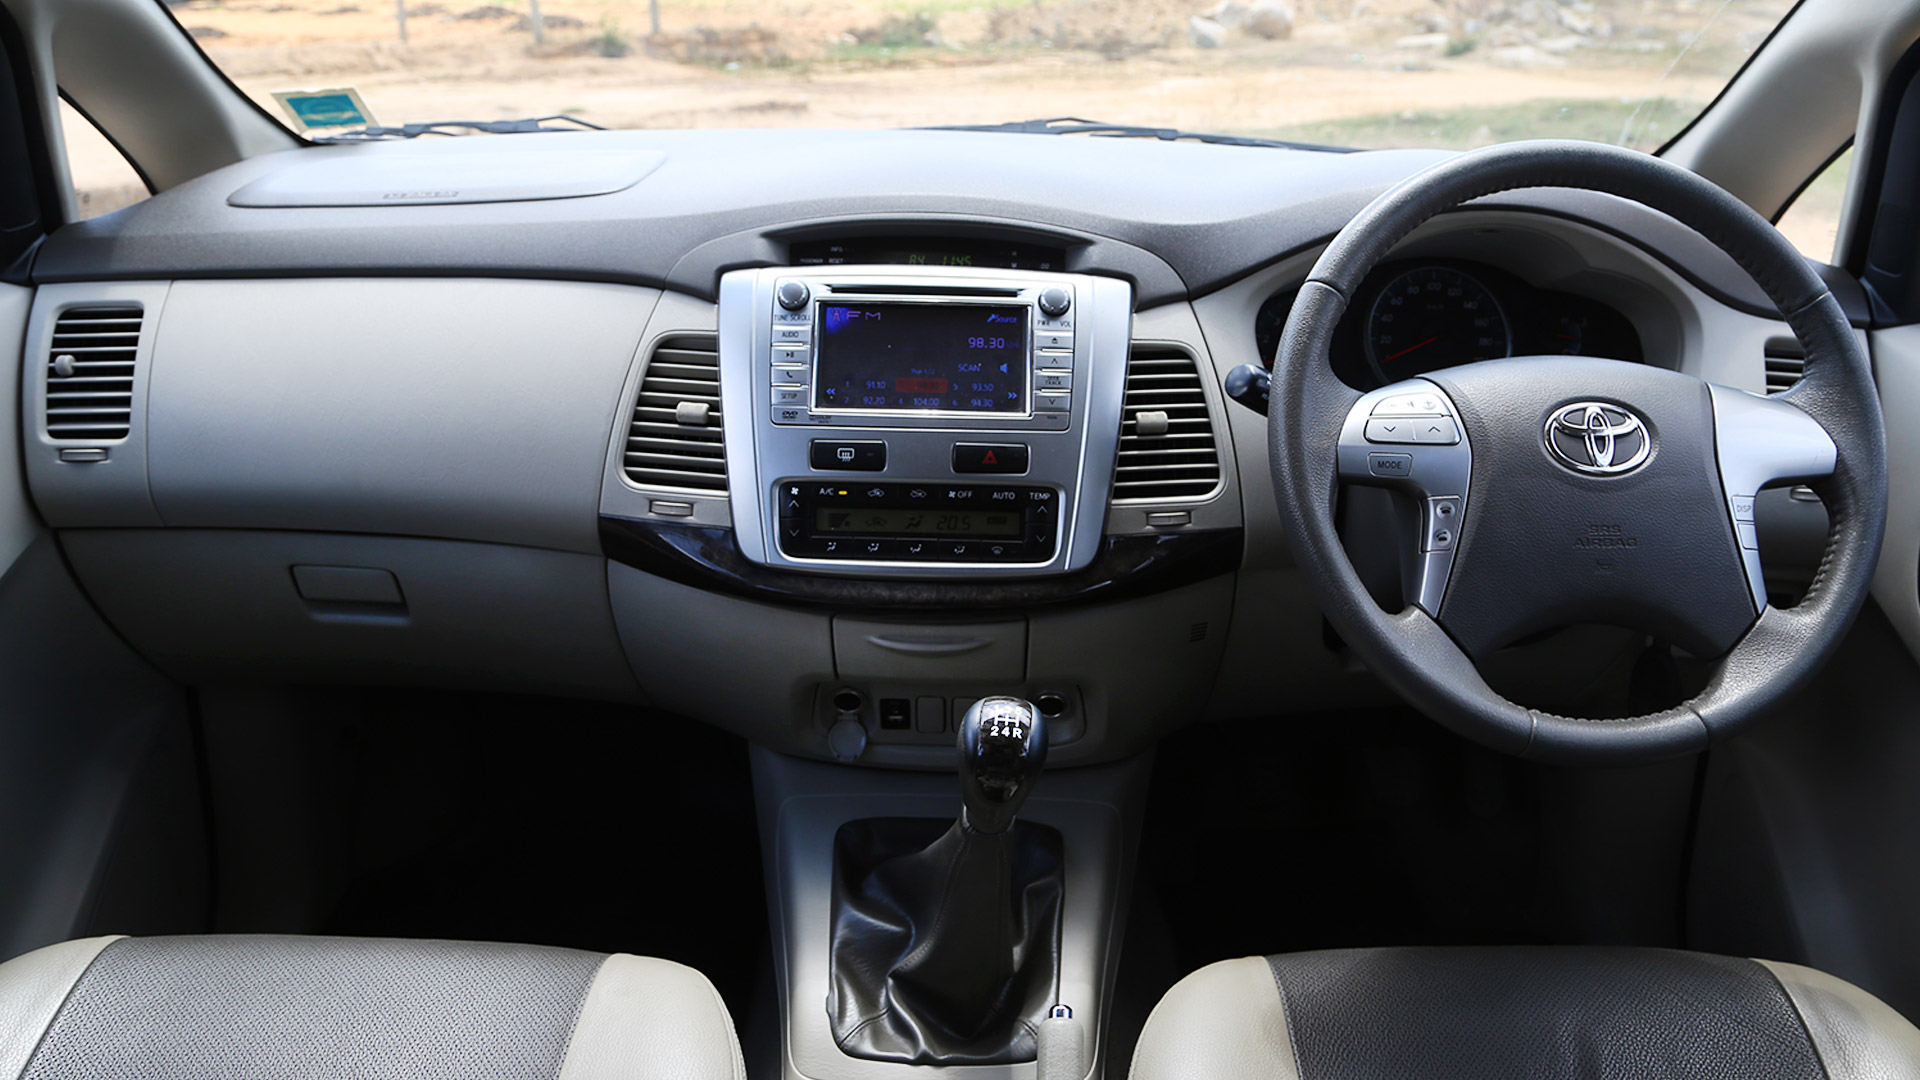 Toyota Innova 2015 2 5g 7 Seater Interior Car Photos Overdrive